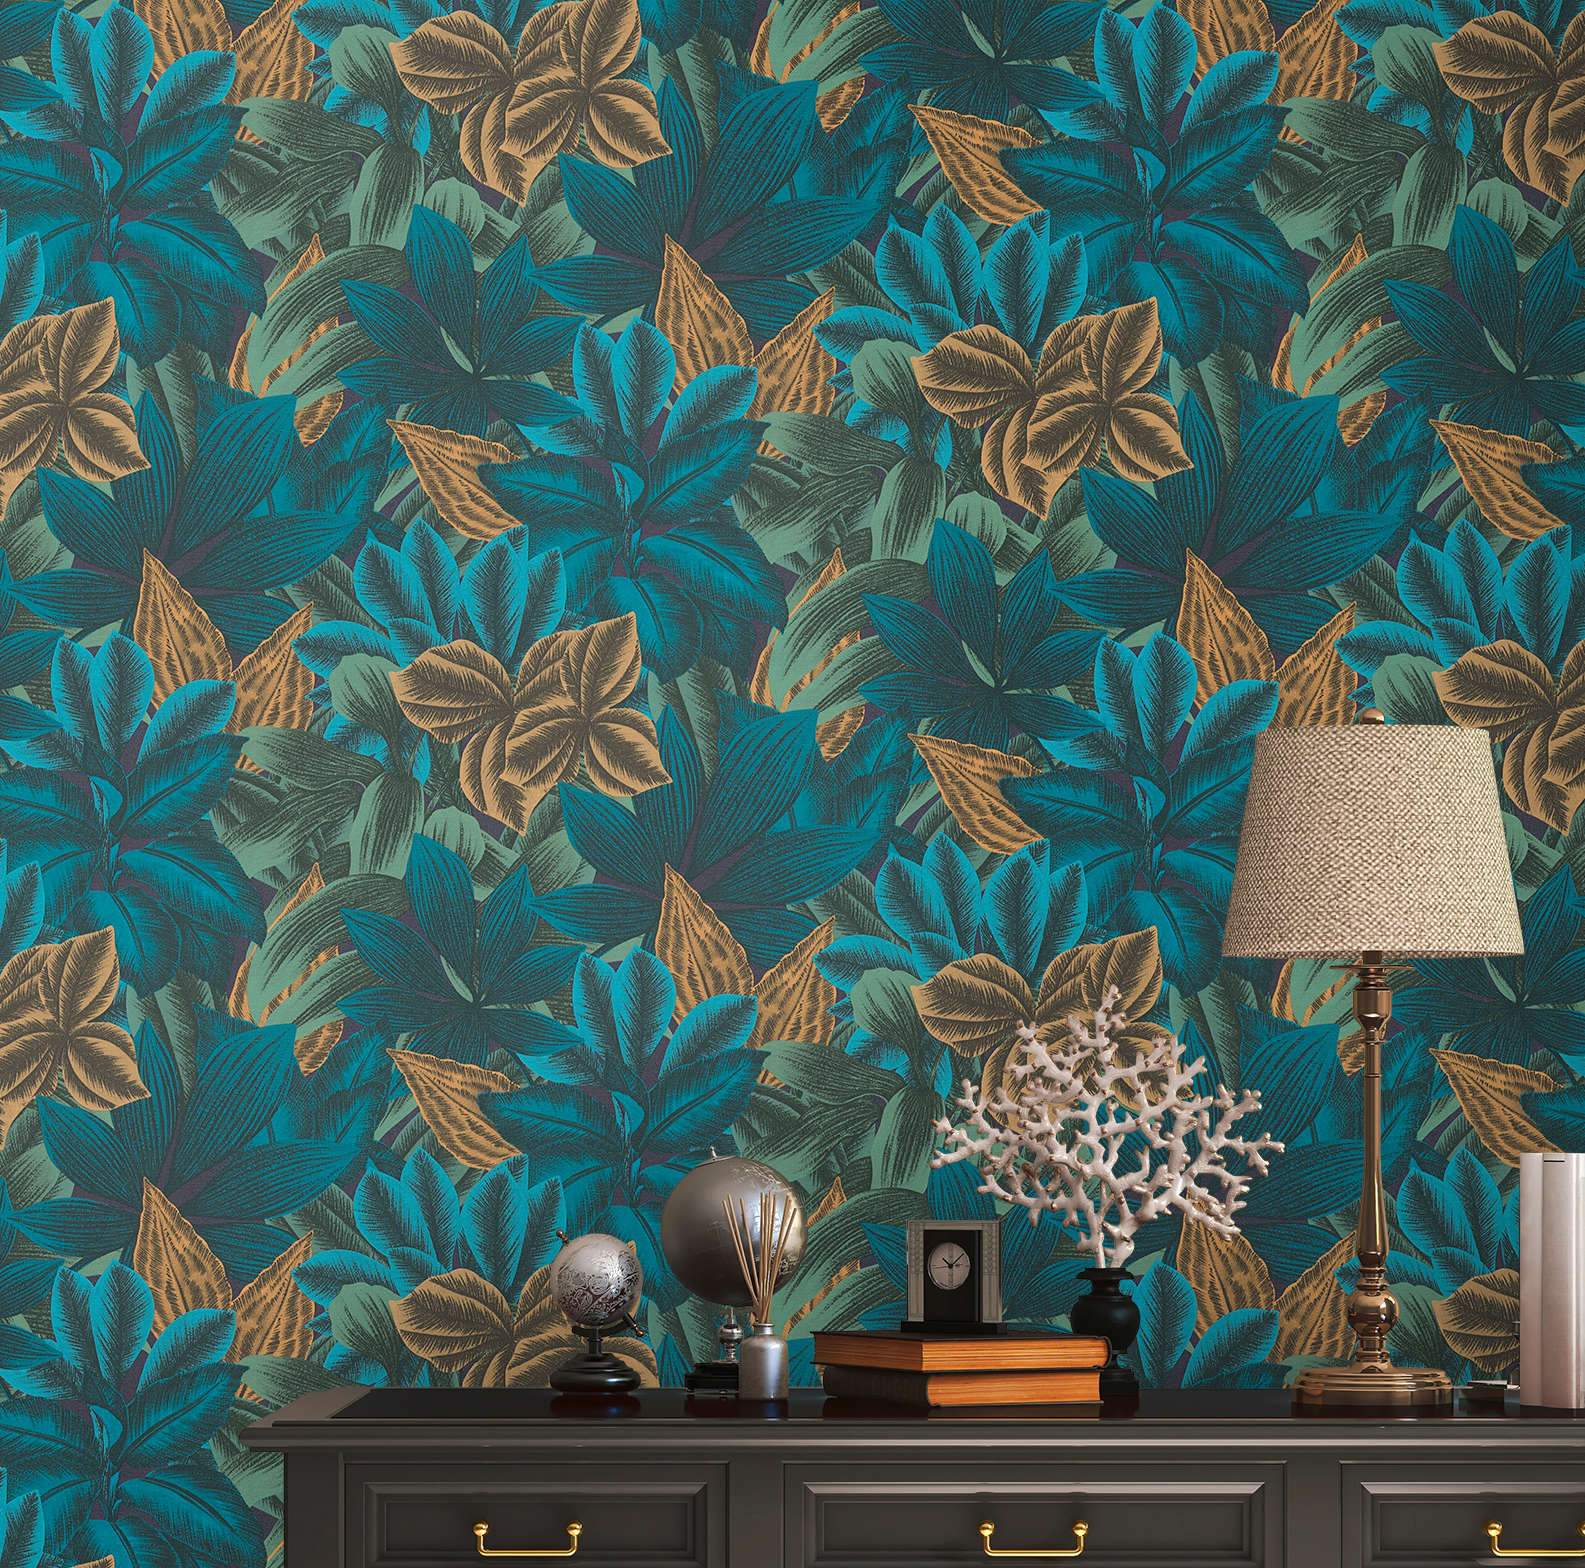             Papel pintado tejido-no tejido floral con motivo de hojas de selva - azul, naranja, morado
        